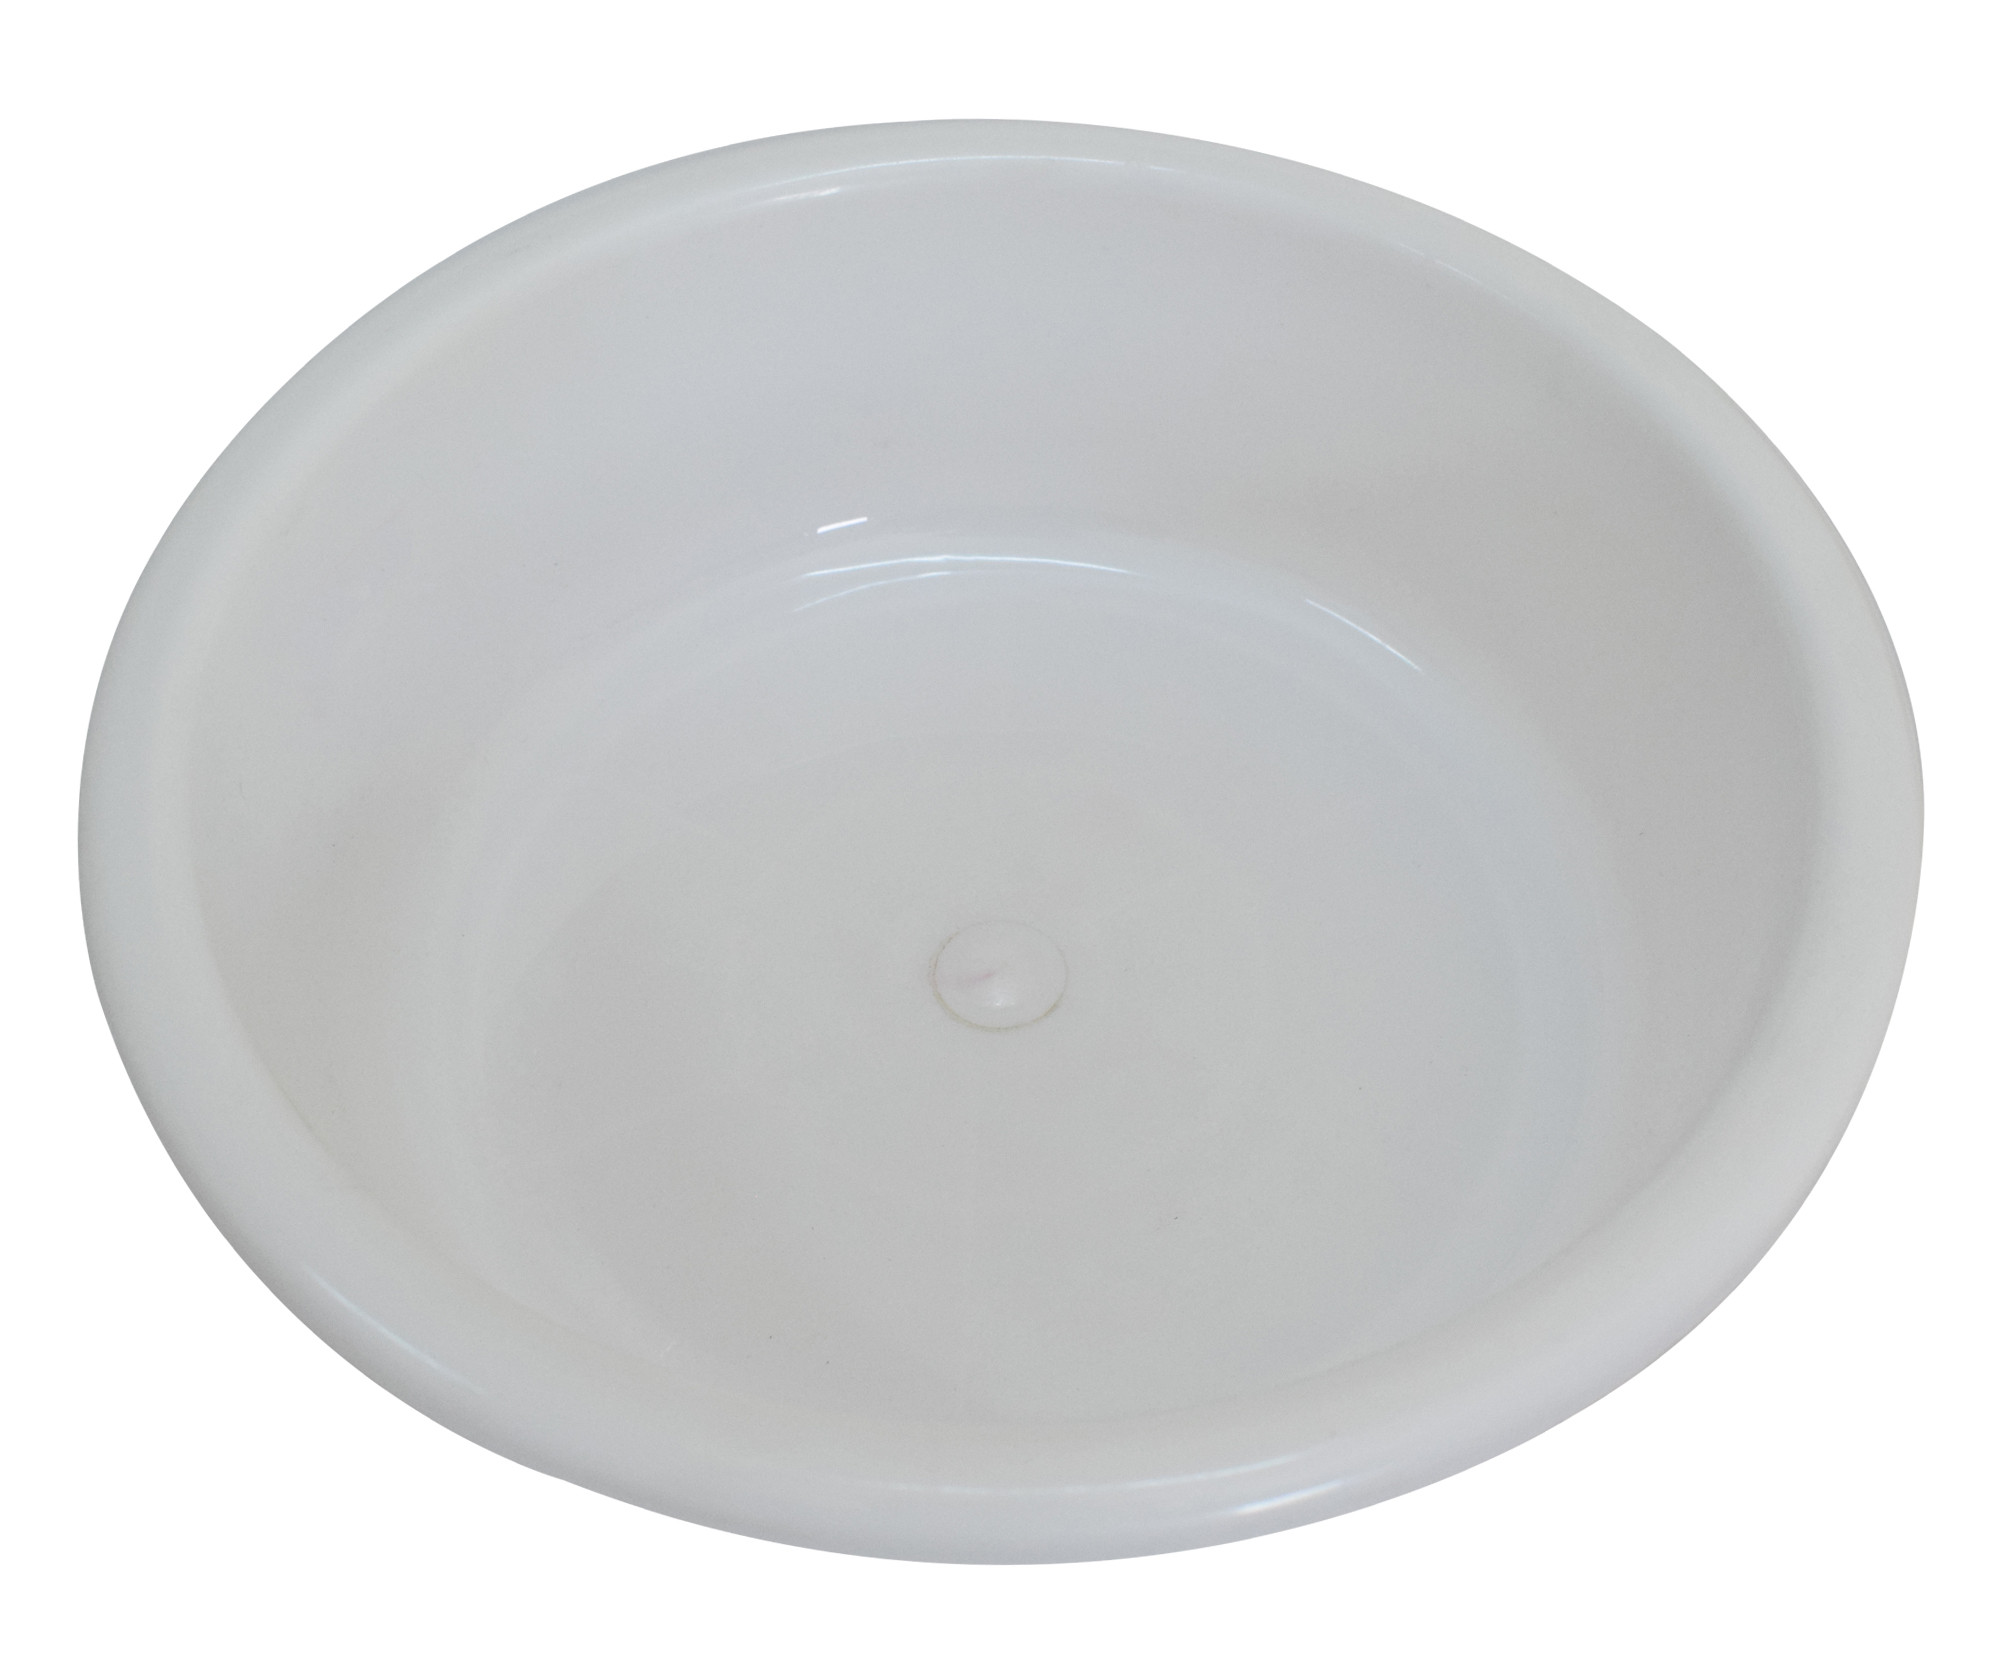 Kuber Industries Multiuses Unbreakable Plastic Knead Dough Basket/Basin Bowl For Home & Kitchen 6 Ltr (White)